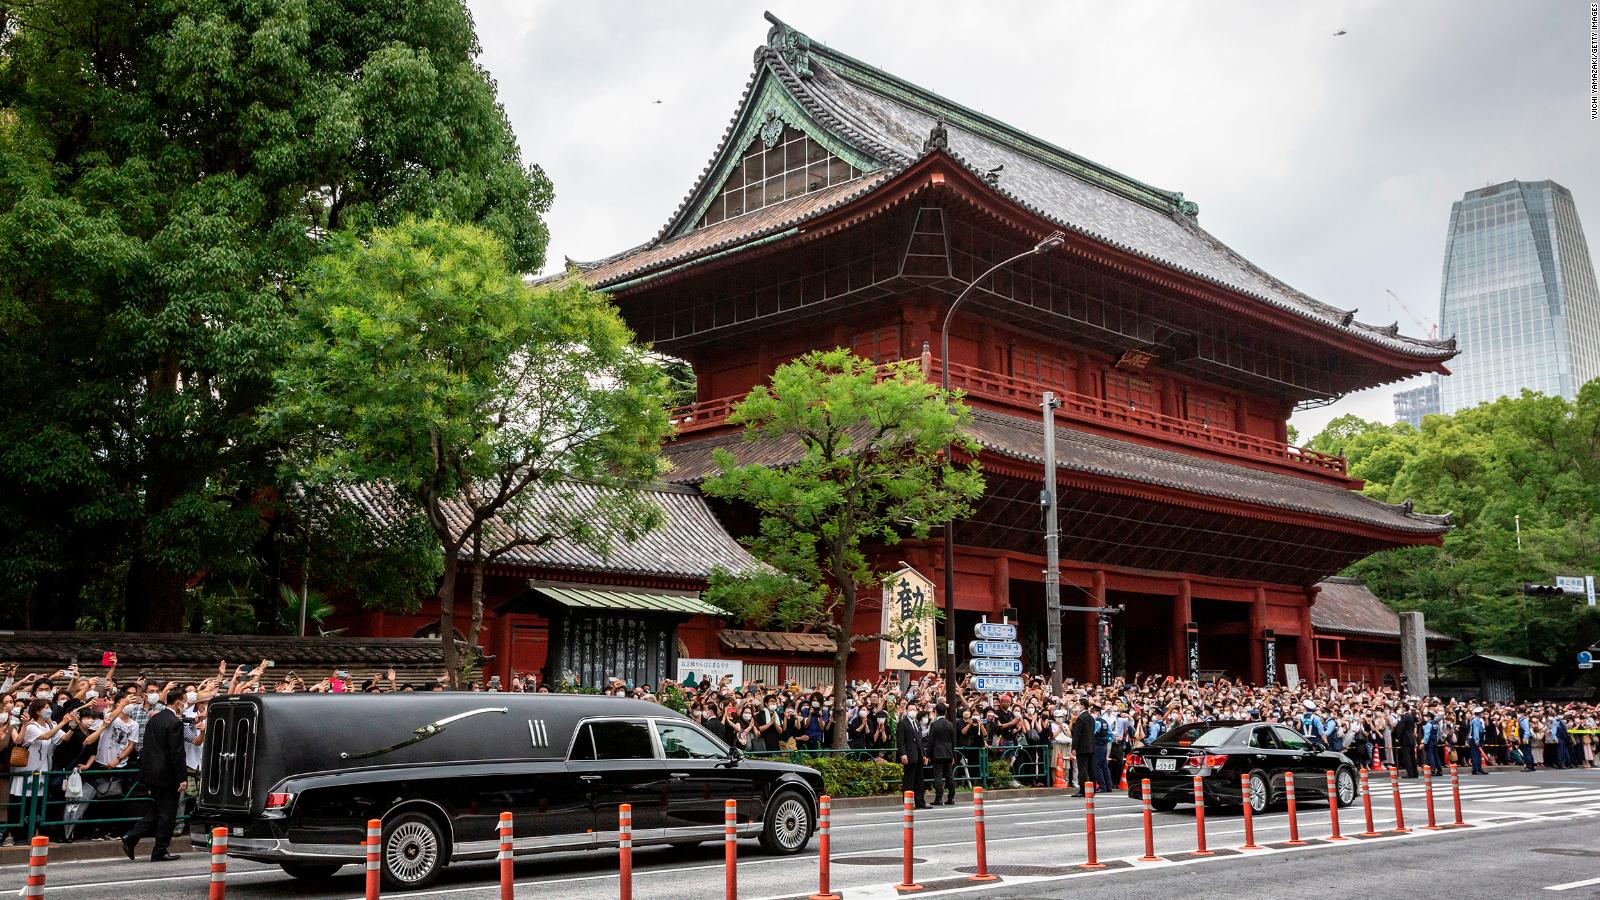 See how Japan bid farewell to former Prime Minister Shinzo Abe